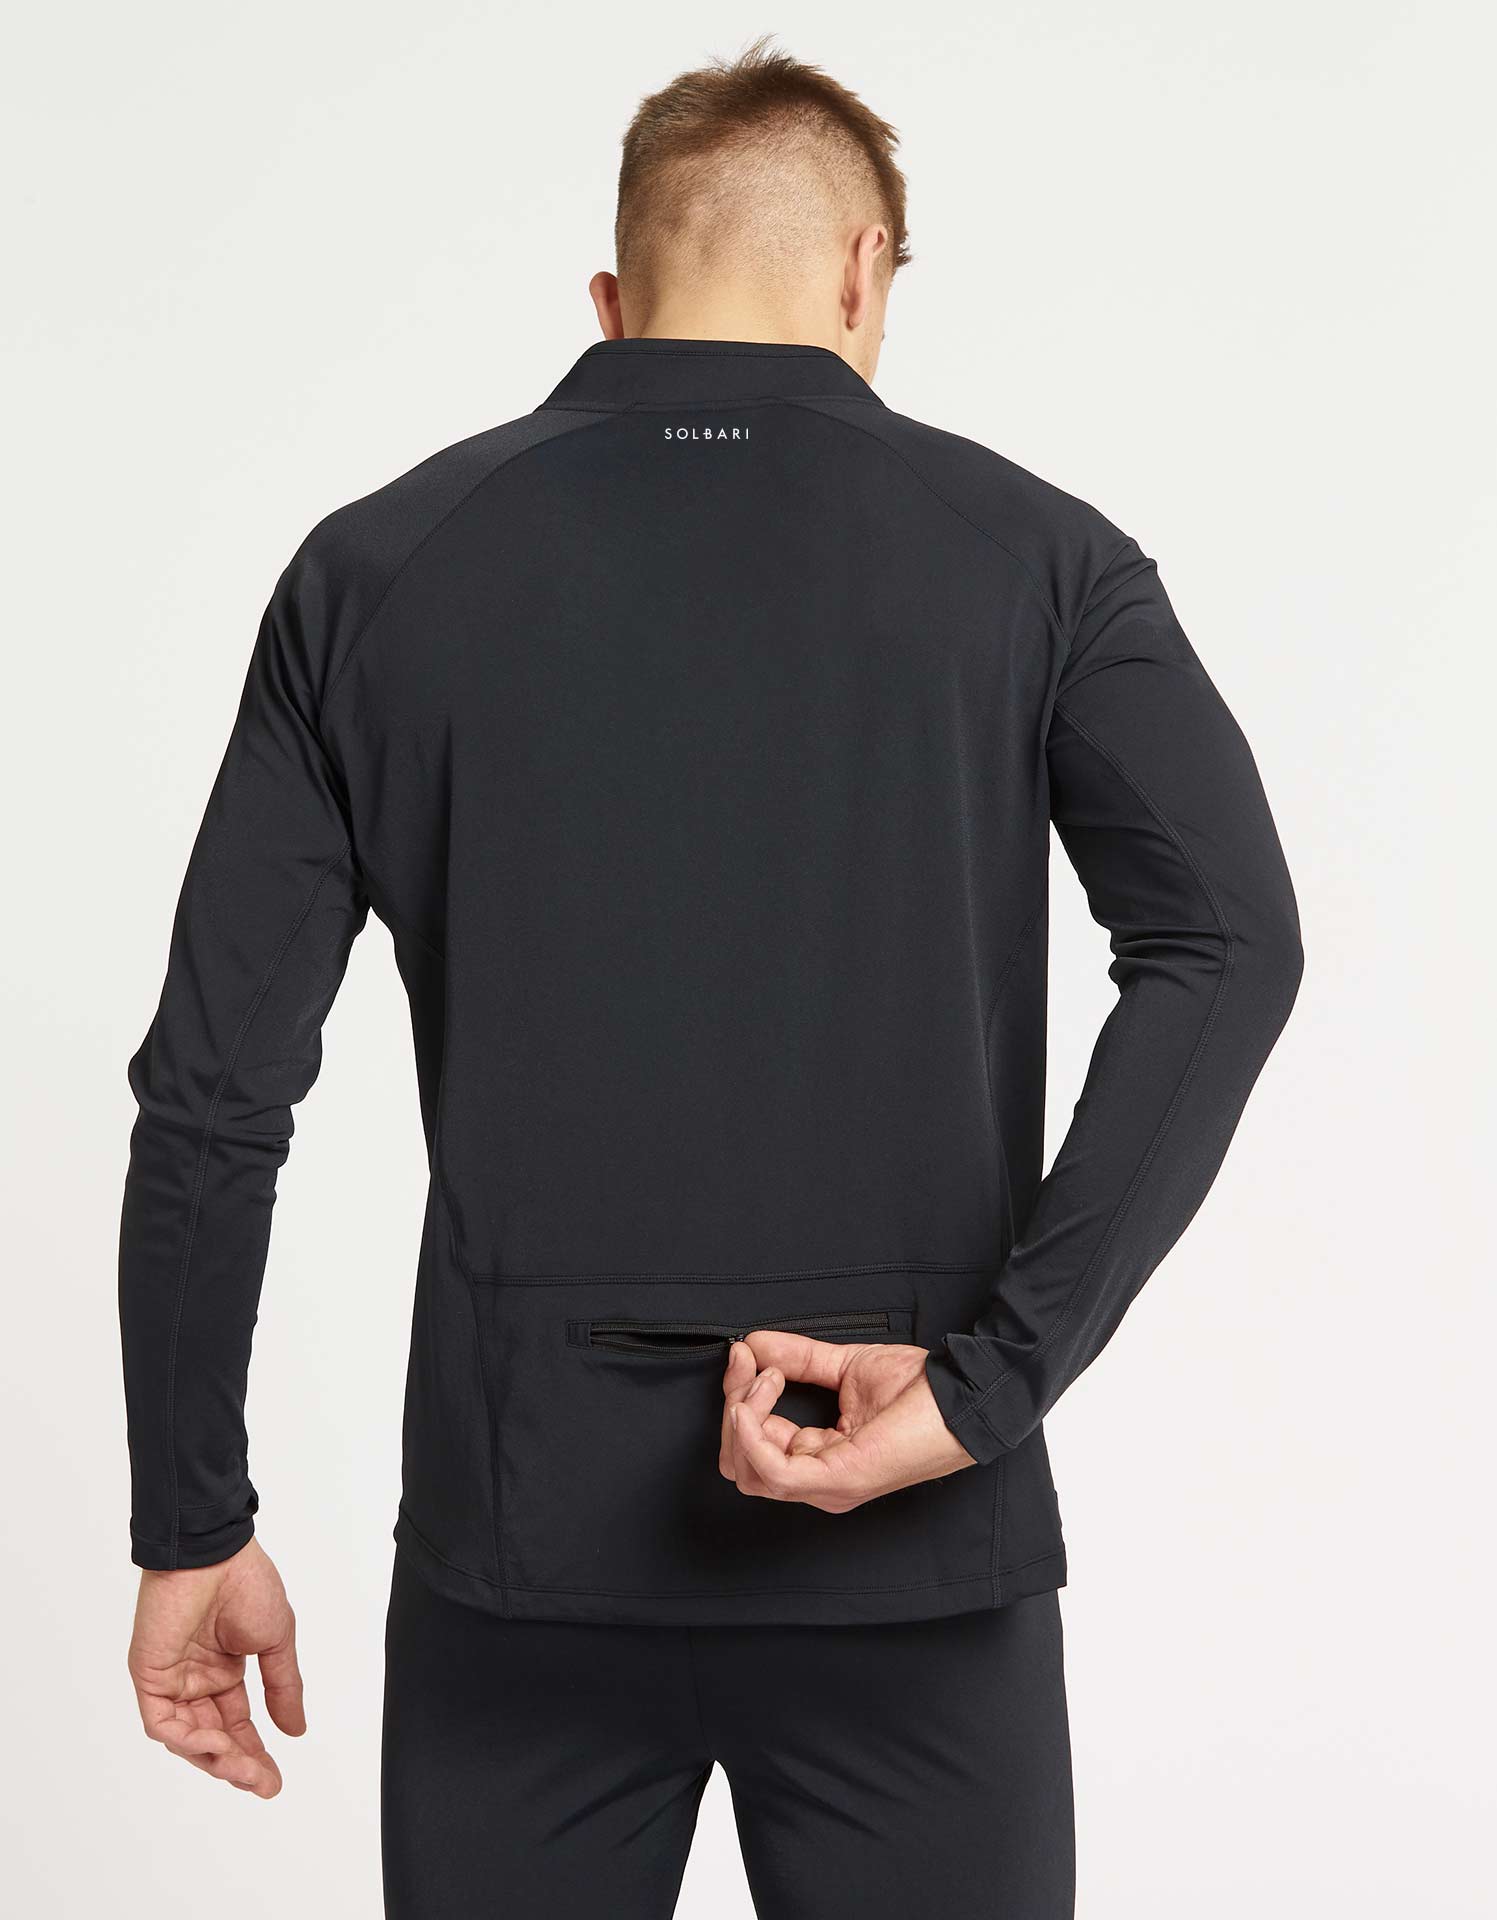 Sun Protective Long Sleeve Full Zip Top For Men UPF50+ – Solbari